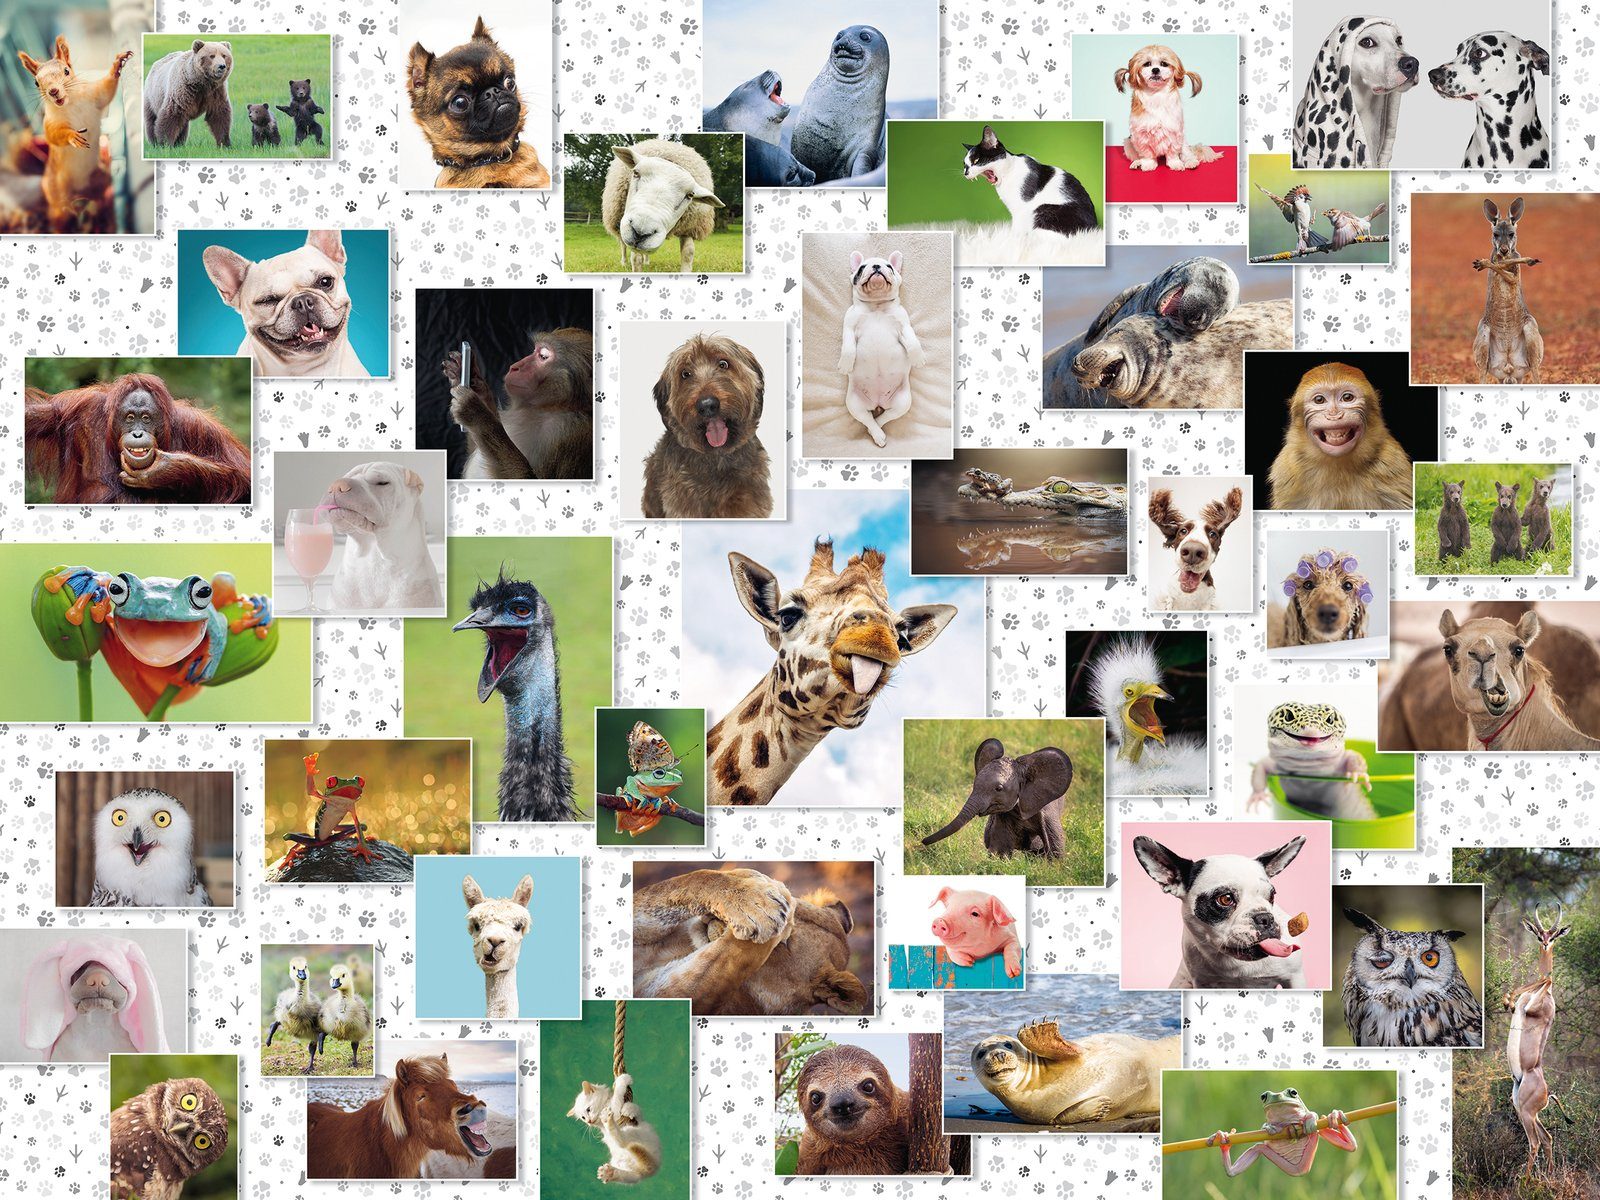 Animals 1500 weltweit Funny Puzzleteile, - Made - Ravensburger Wald schützt Germany, Puzzle Collage, in FSC®